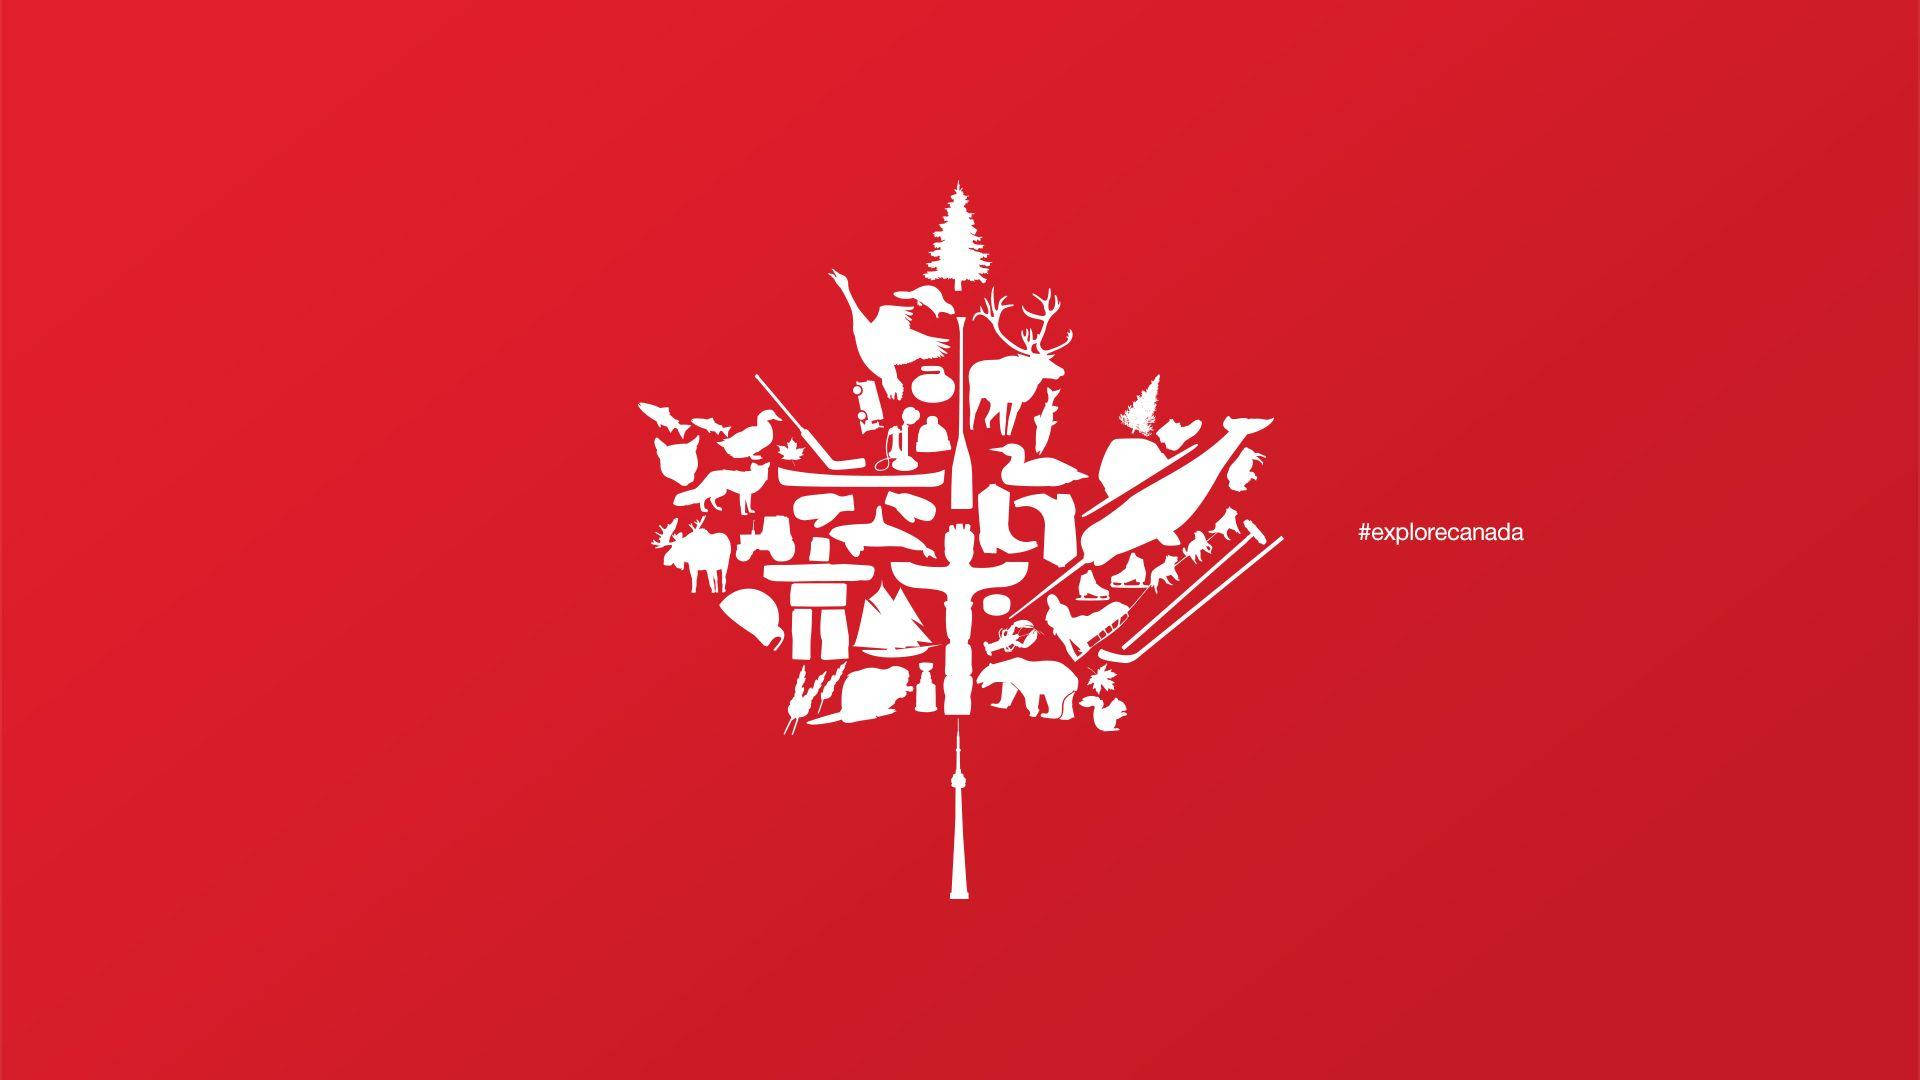 Canada Day Background Photos